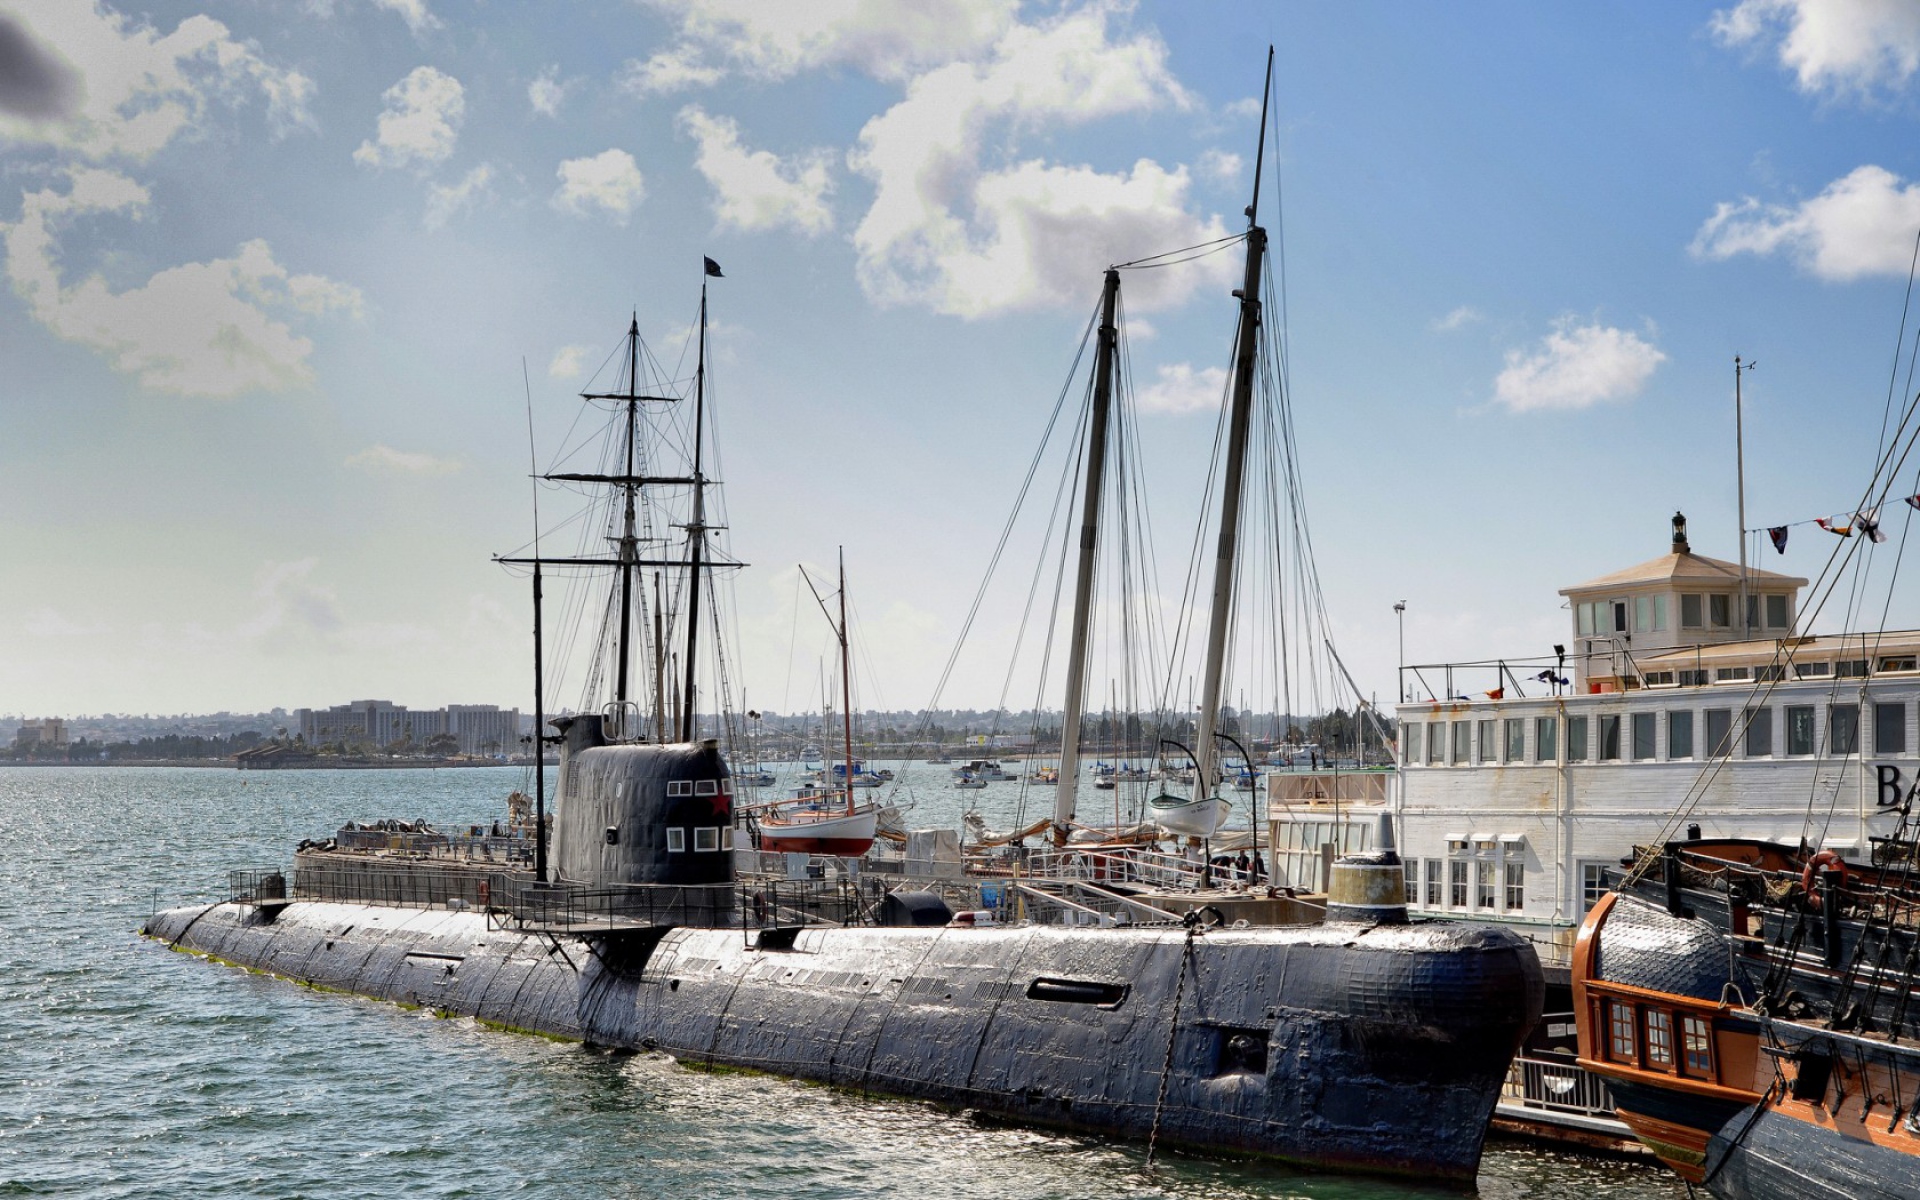 Картинки Морской музей, сан диего, подводная лодка b-39, калифорния, сан-диго-бухта фото и обои на рабочий стол